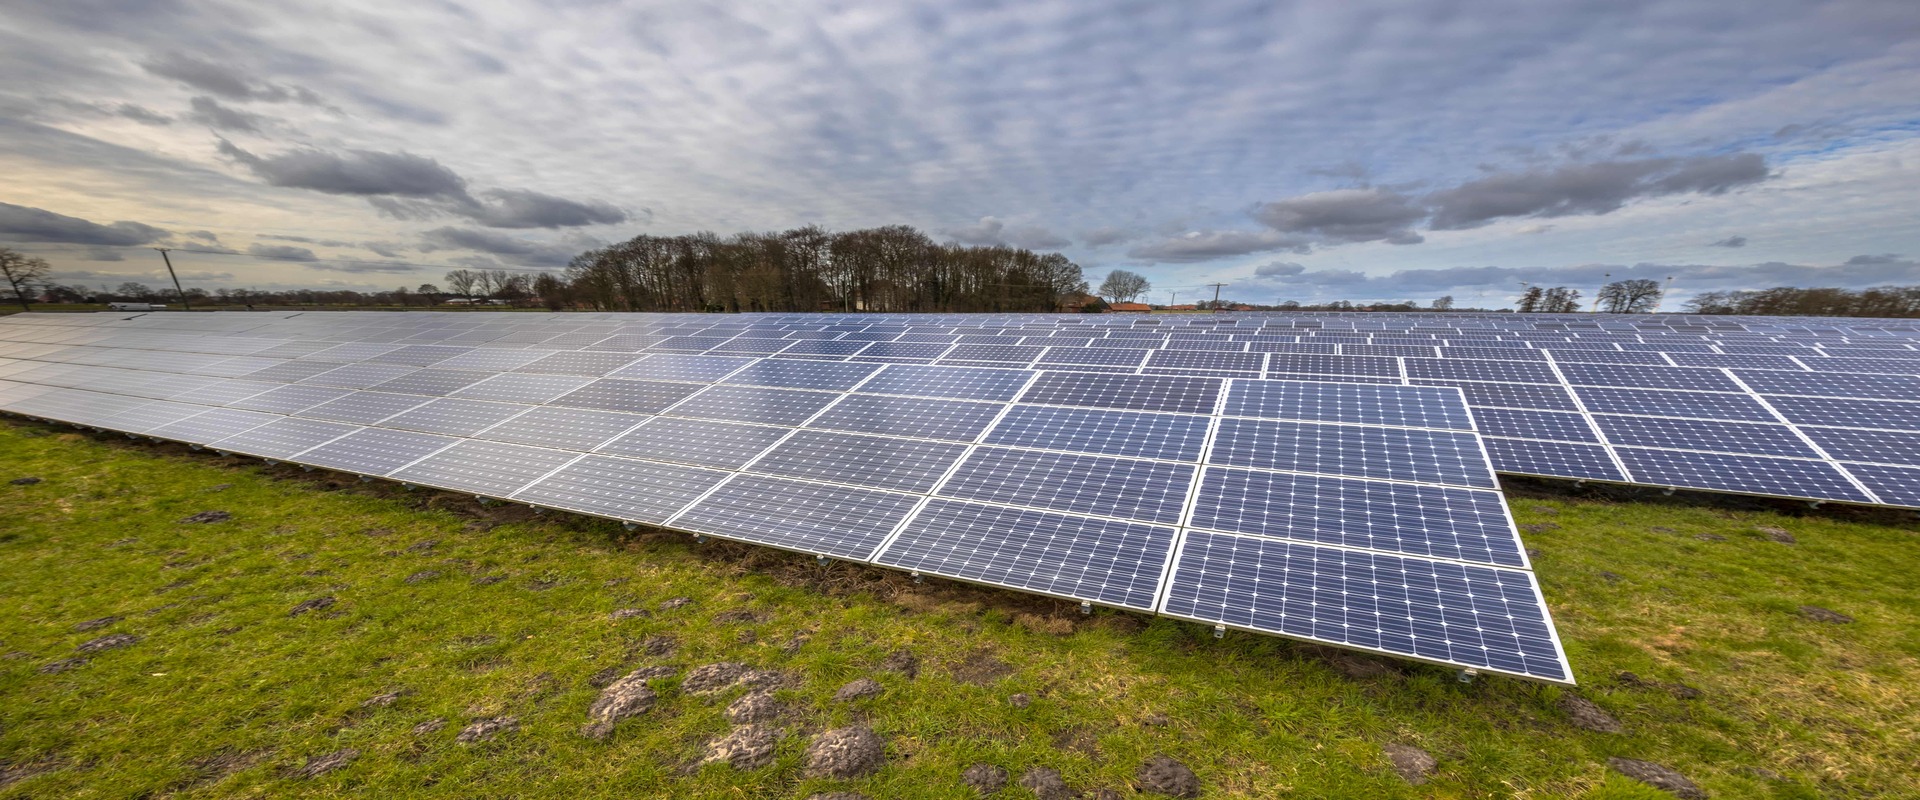 solar-energy-panels-clean-energy-background-2021-08-26-16-38-15-utc-min (1) (2)